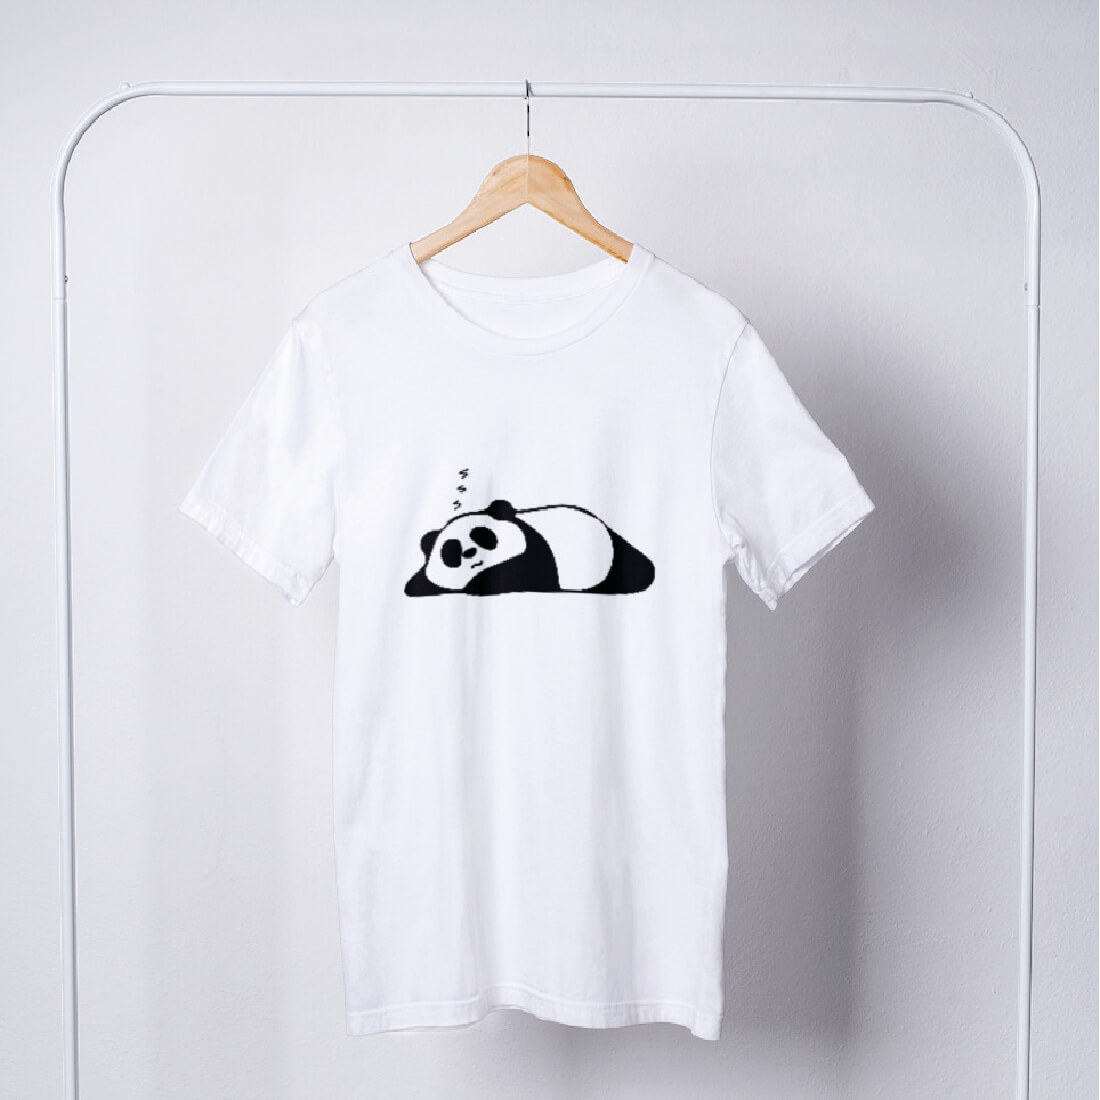 Resting Panda T-shirt Design Graphics preview image.